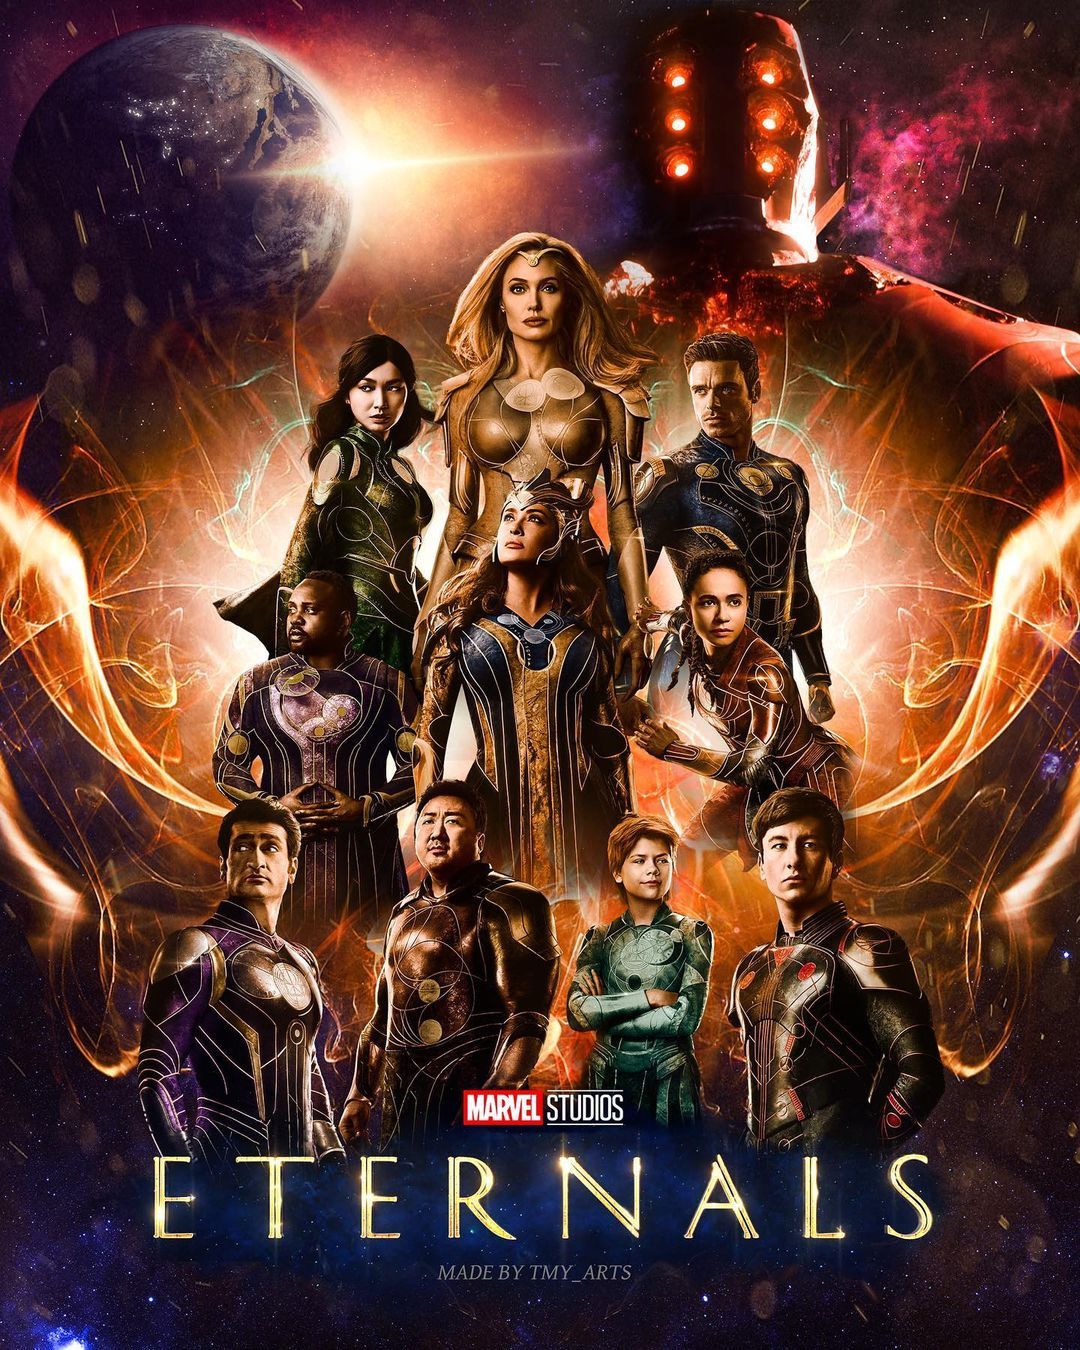 Eternals ฮีโร่พลังเทพเจ้า (2021)